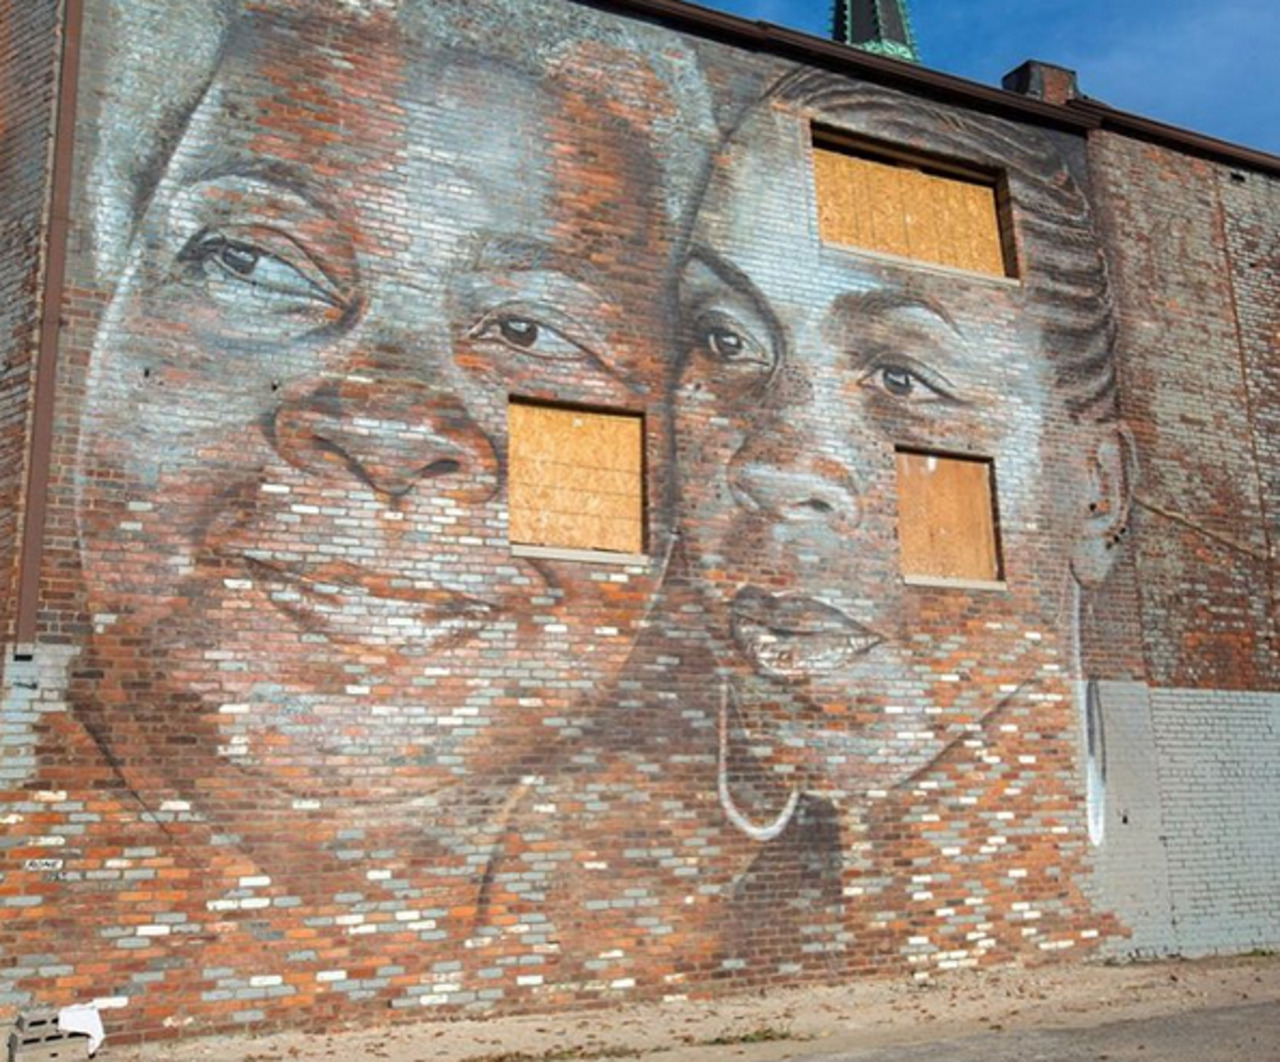 Another portrait beauty by #Rone in Detroit for @MarketMurals and @1xrun #streetart #urbanart #graffiti http://t.co/Ml7A0sZgNM